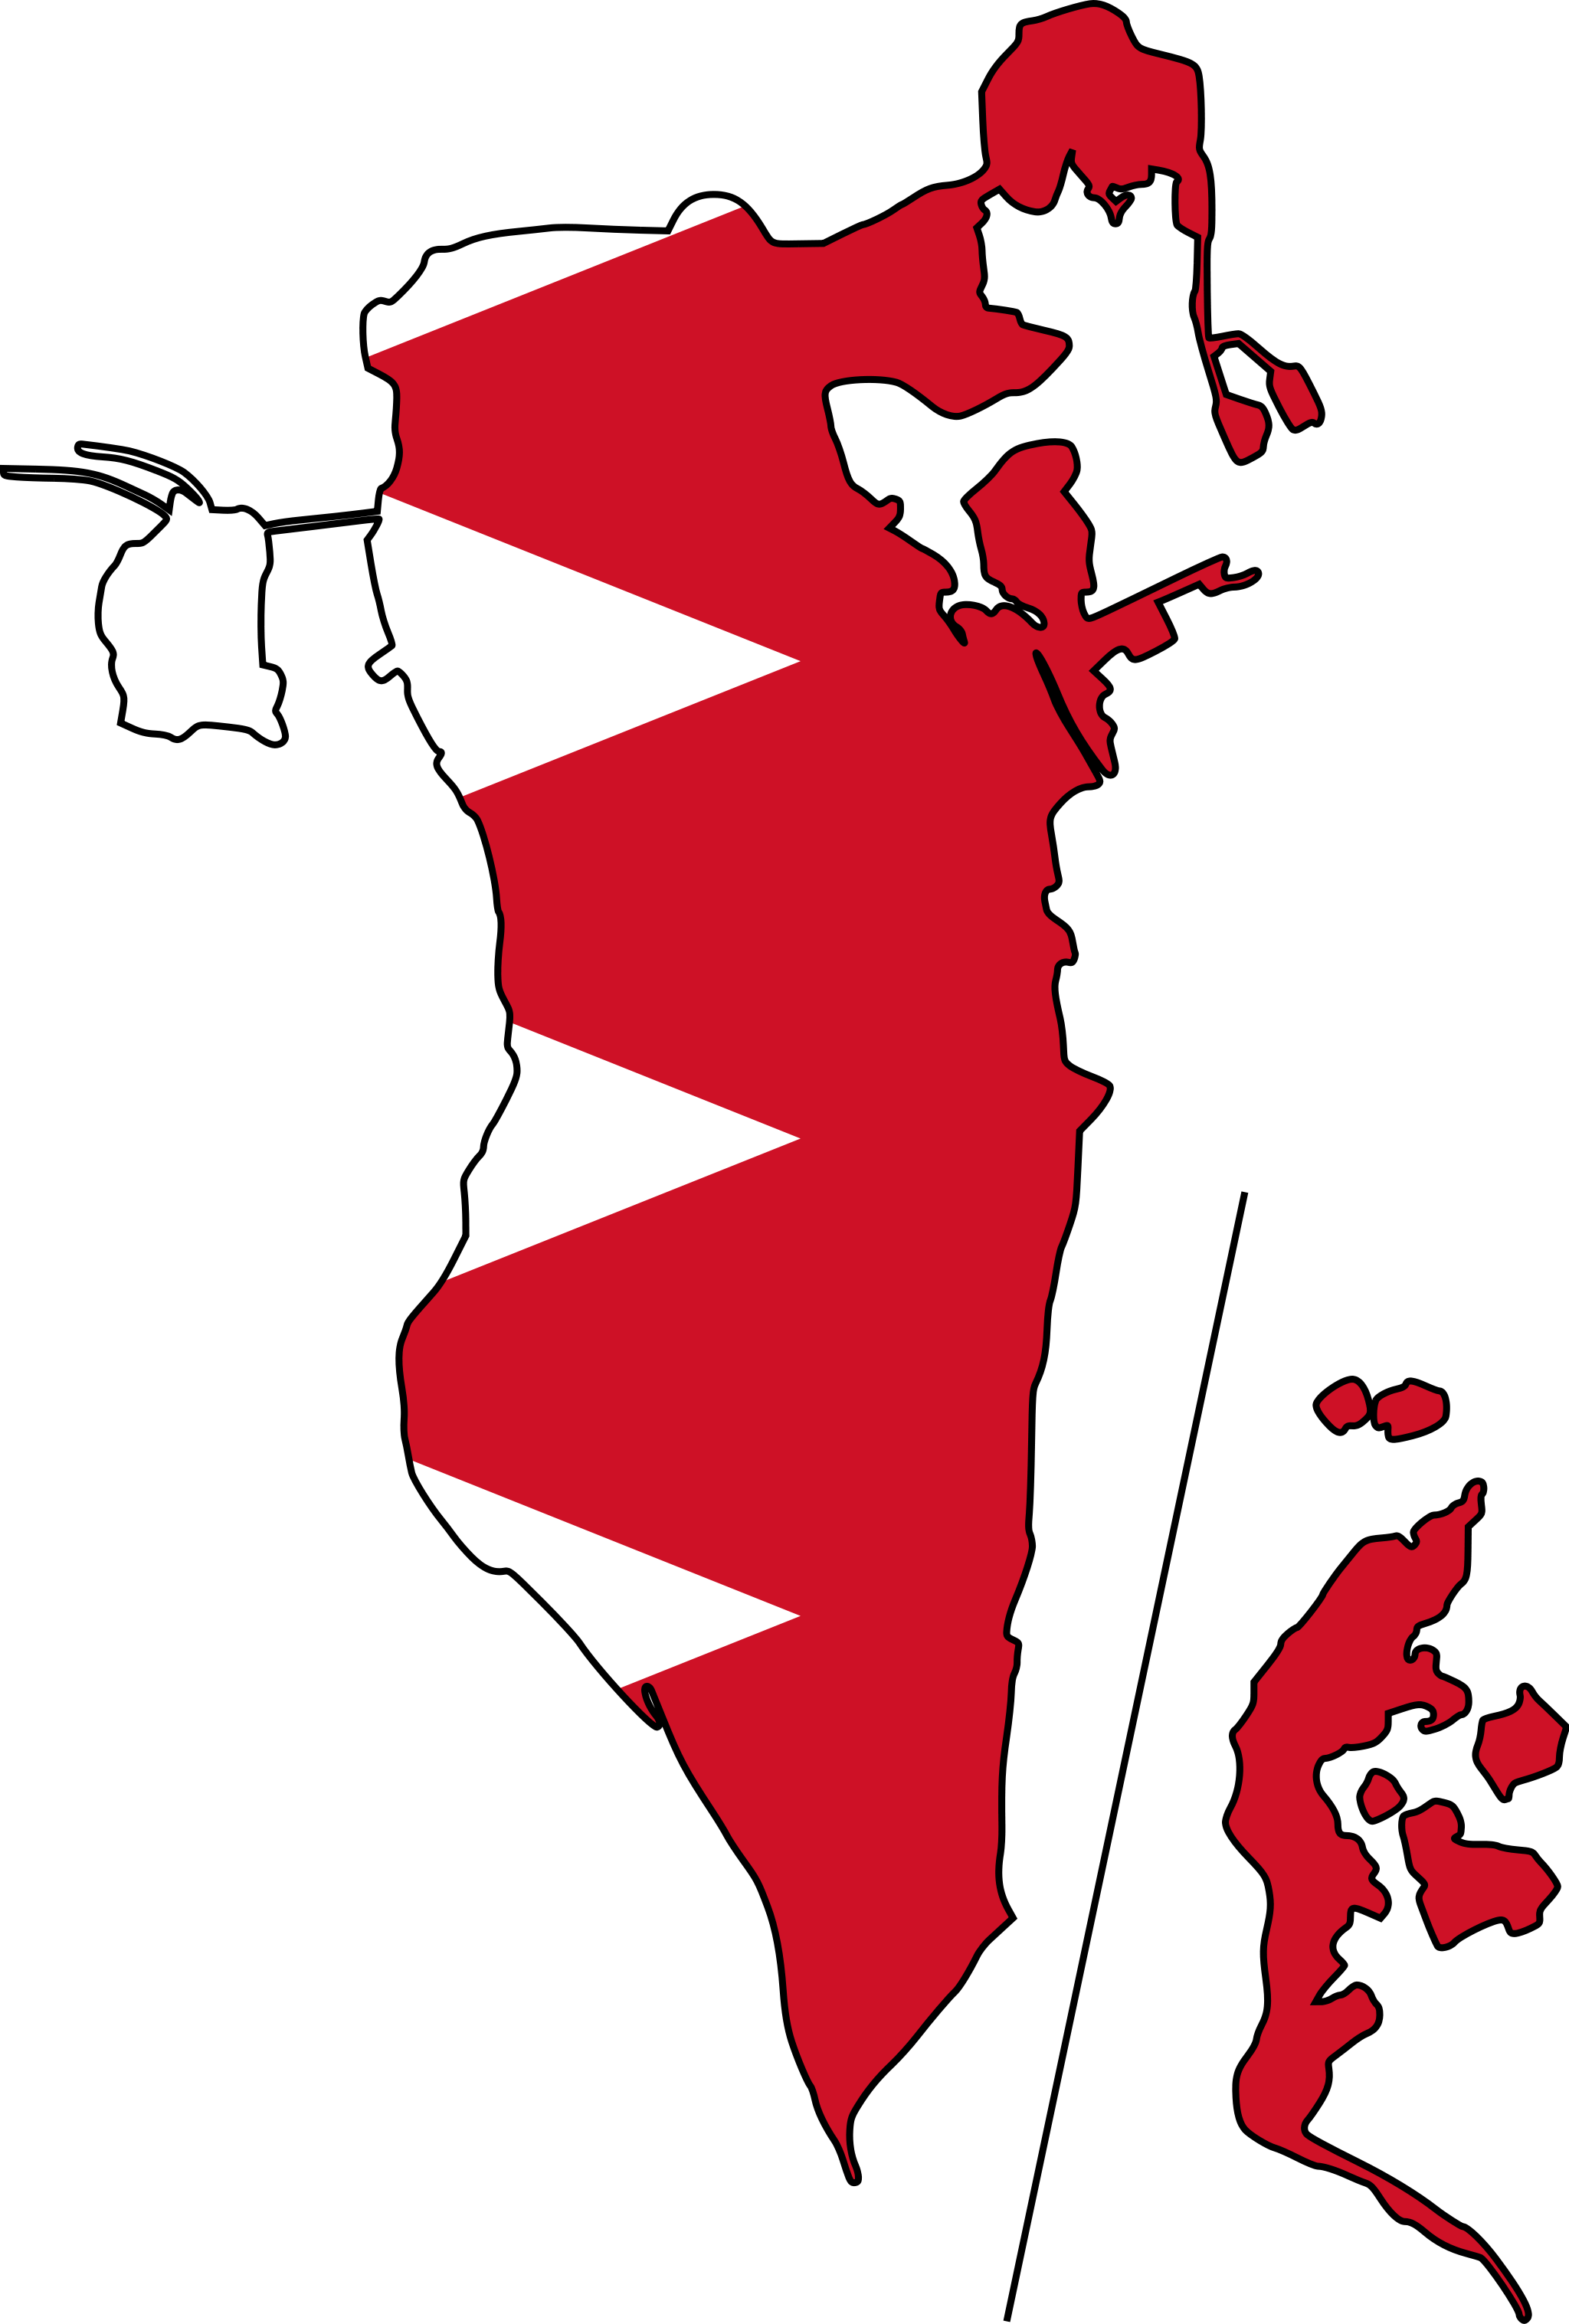 Download flag icon of Bahrain